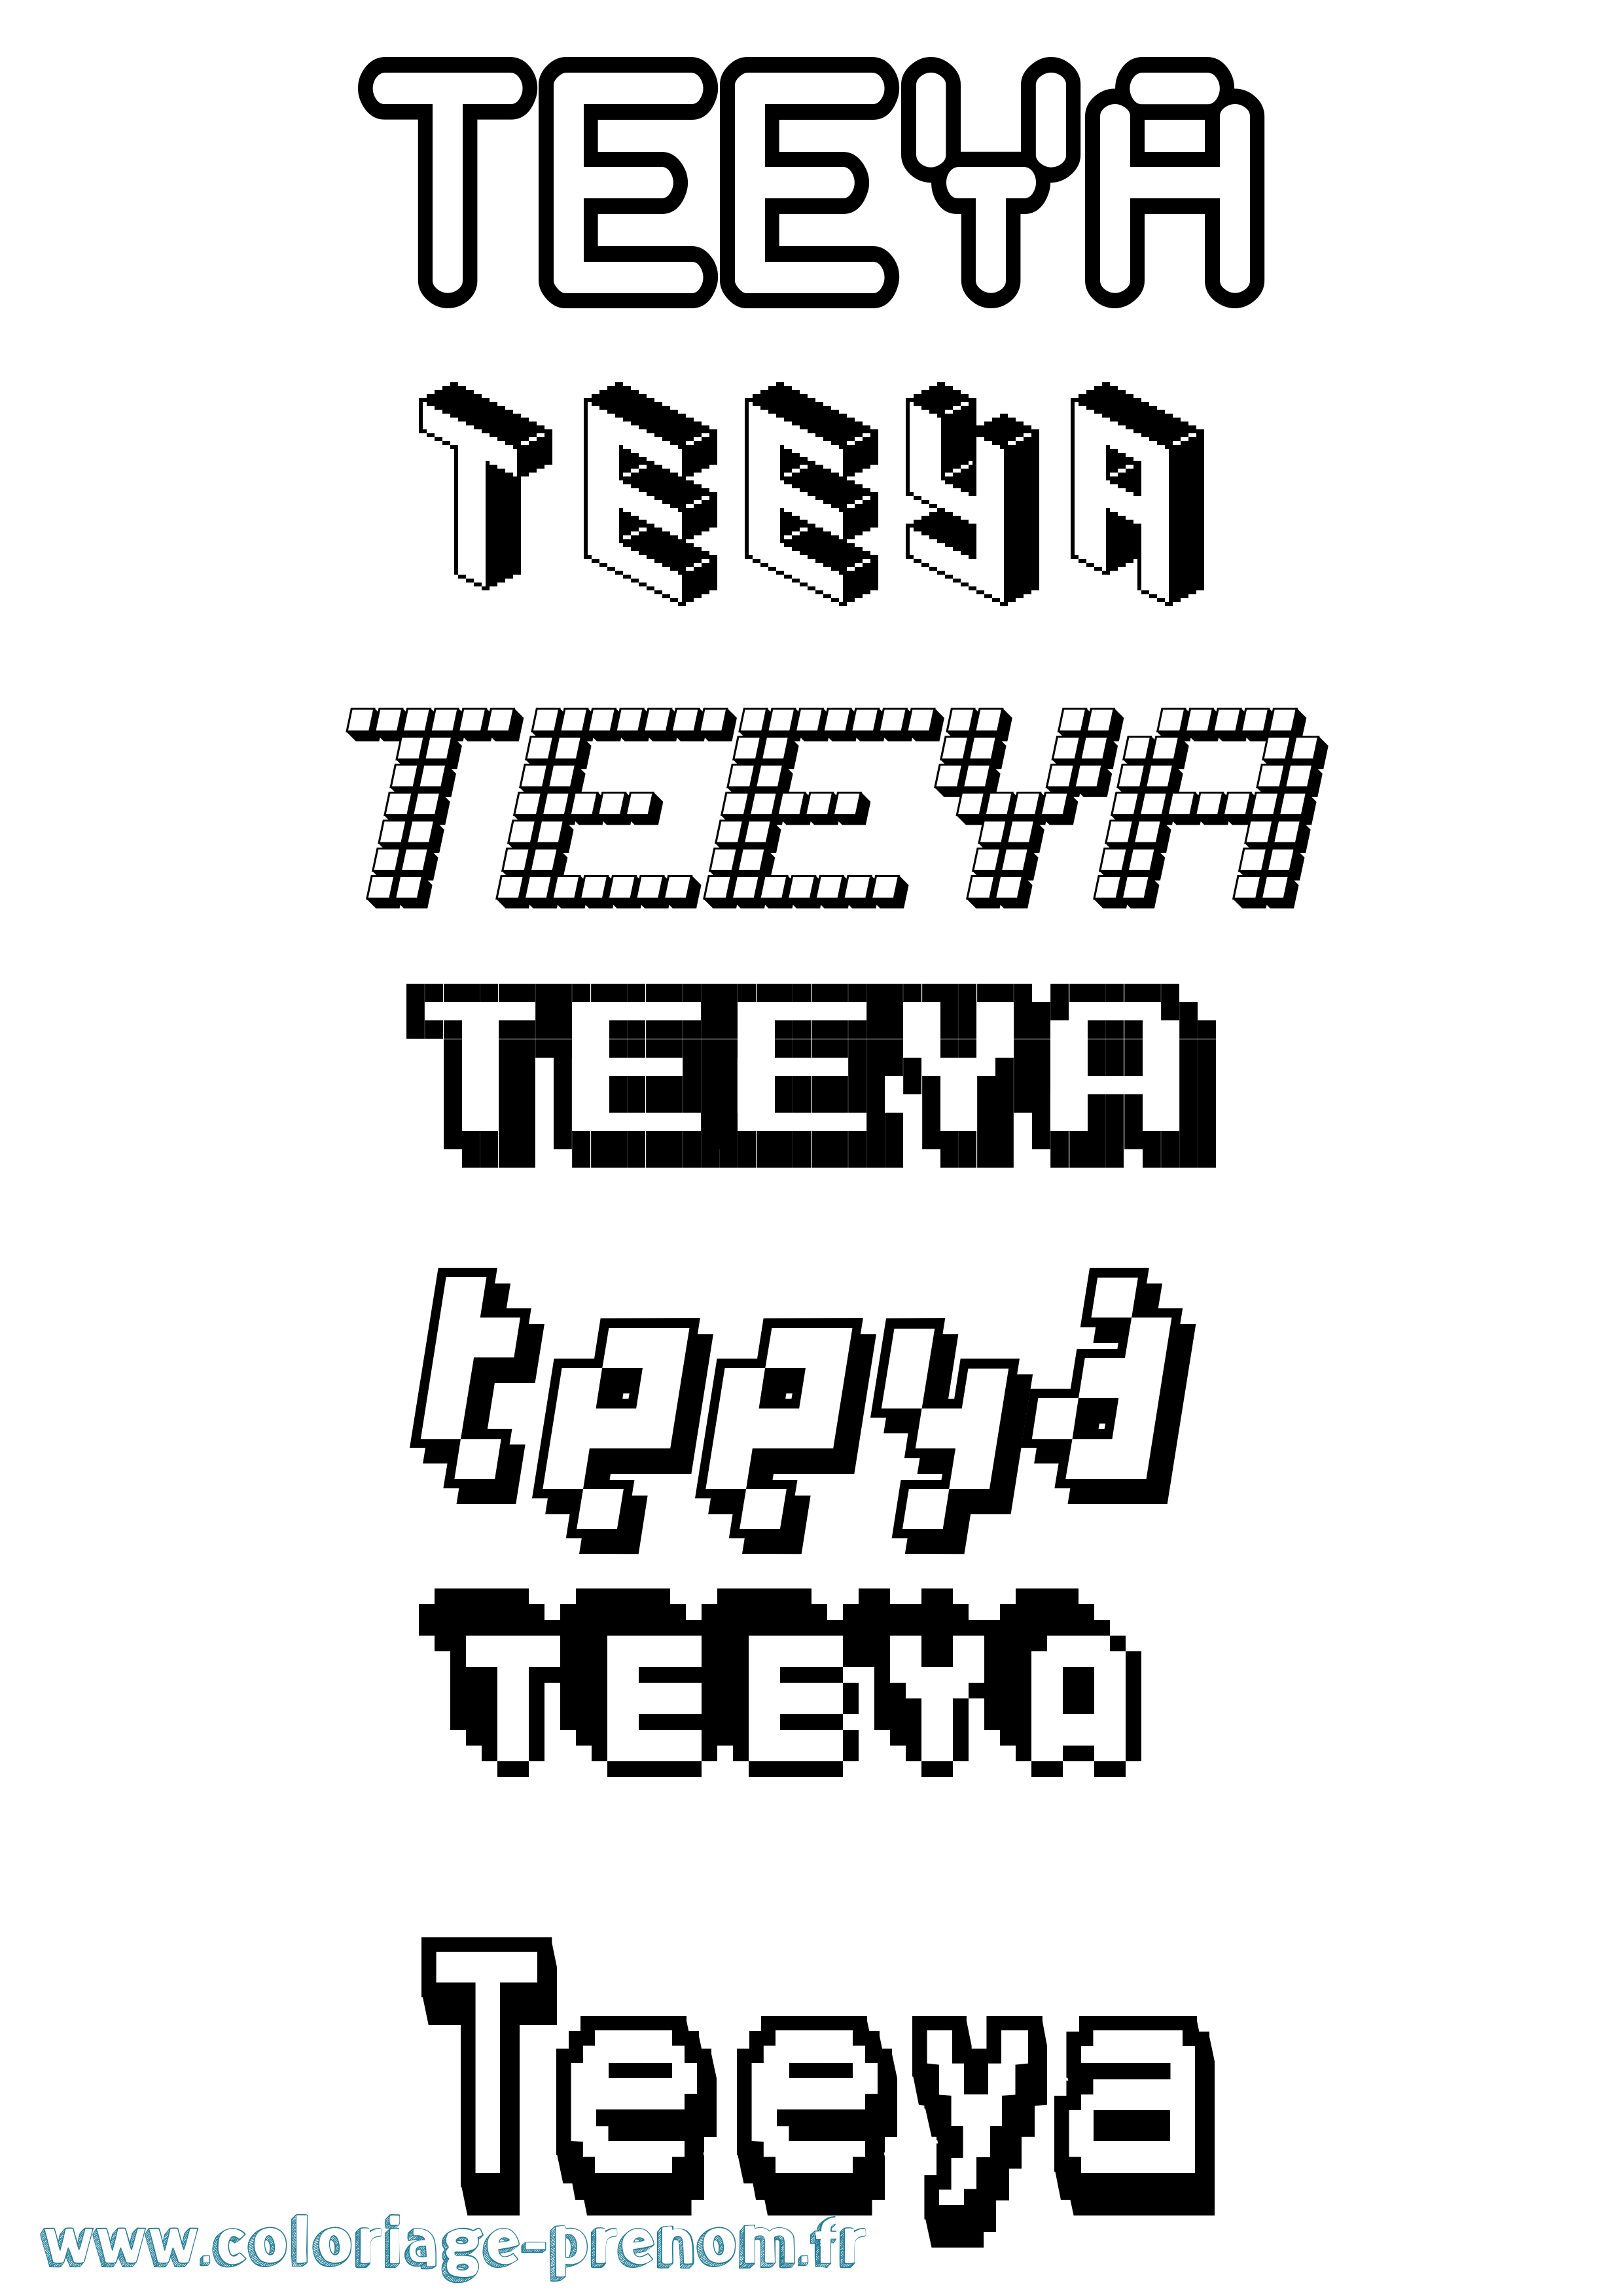 Coloriage prénom Teeya Pixel